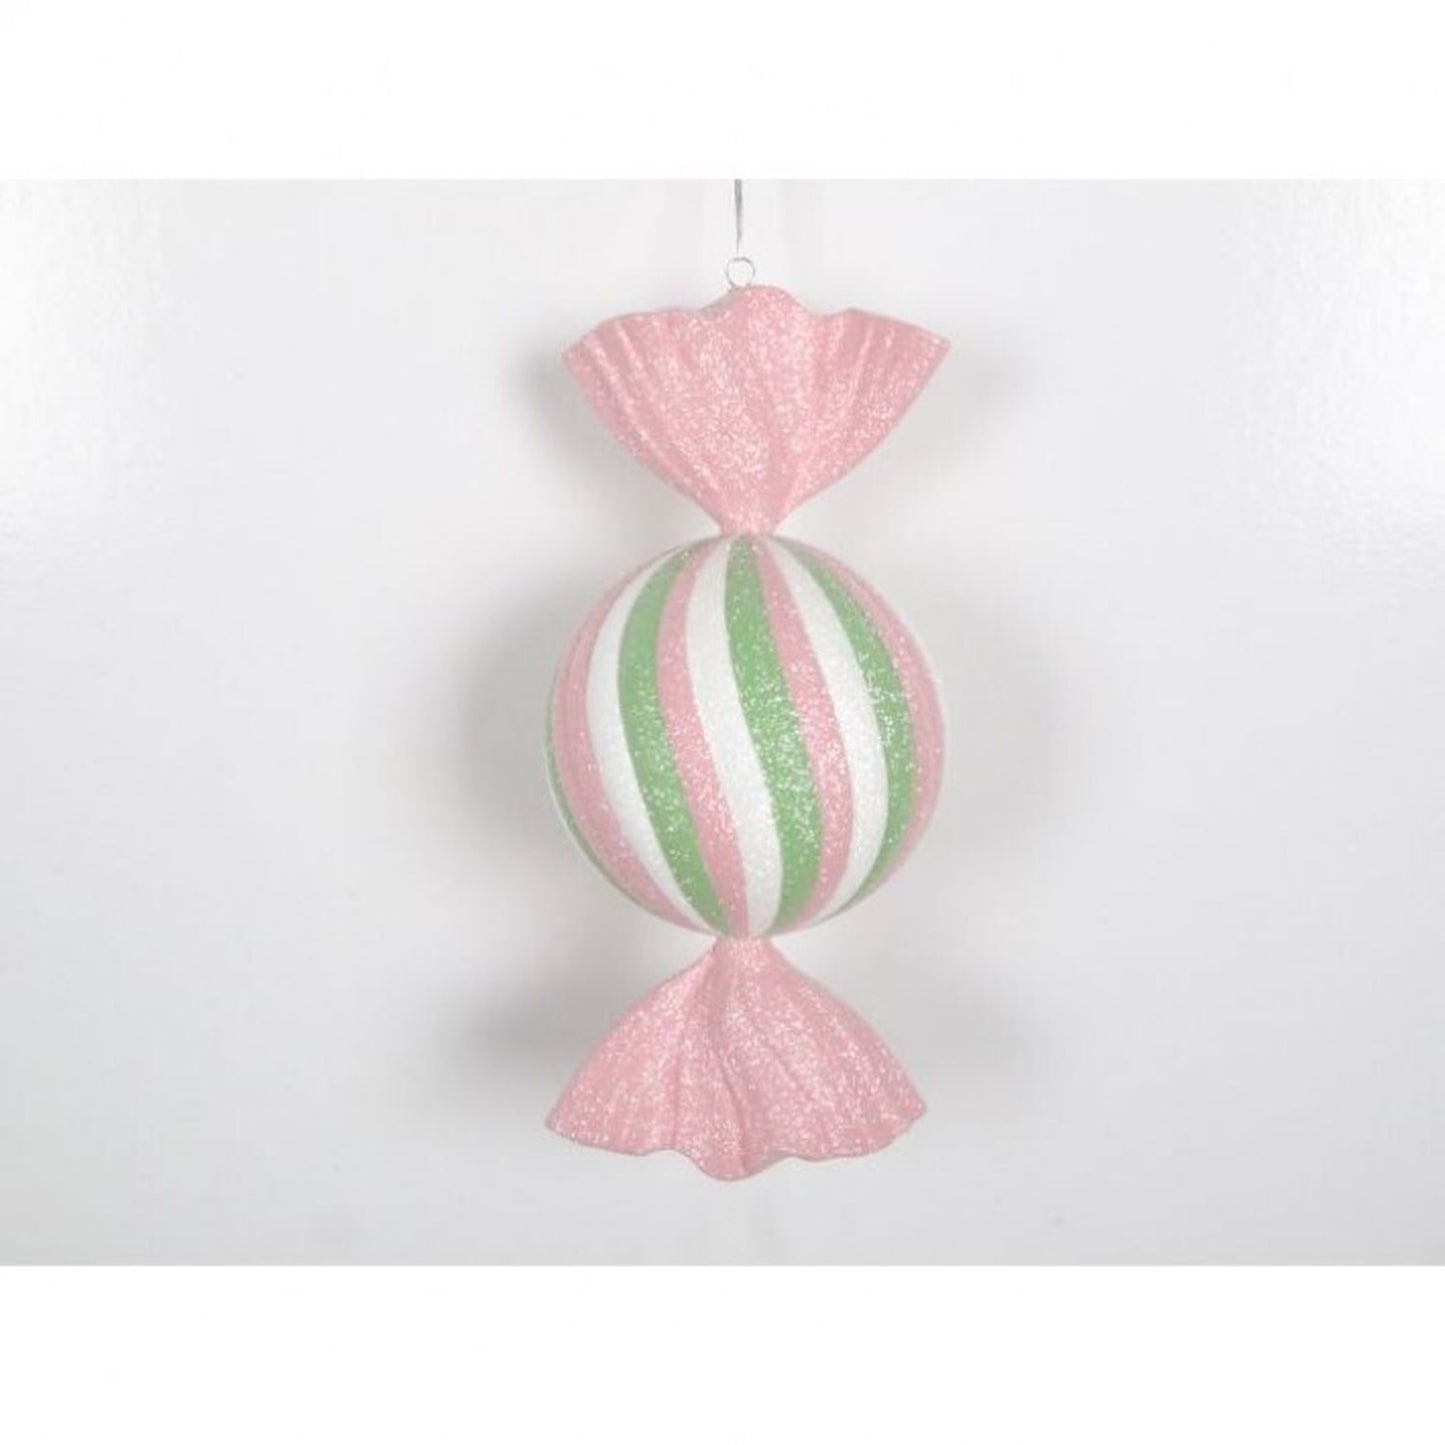 Regency International 13" Vp Swirl Candy Ornament